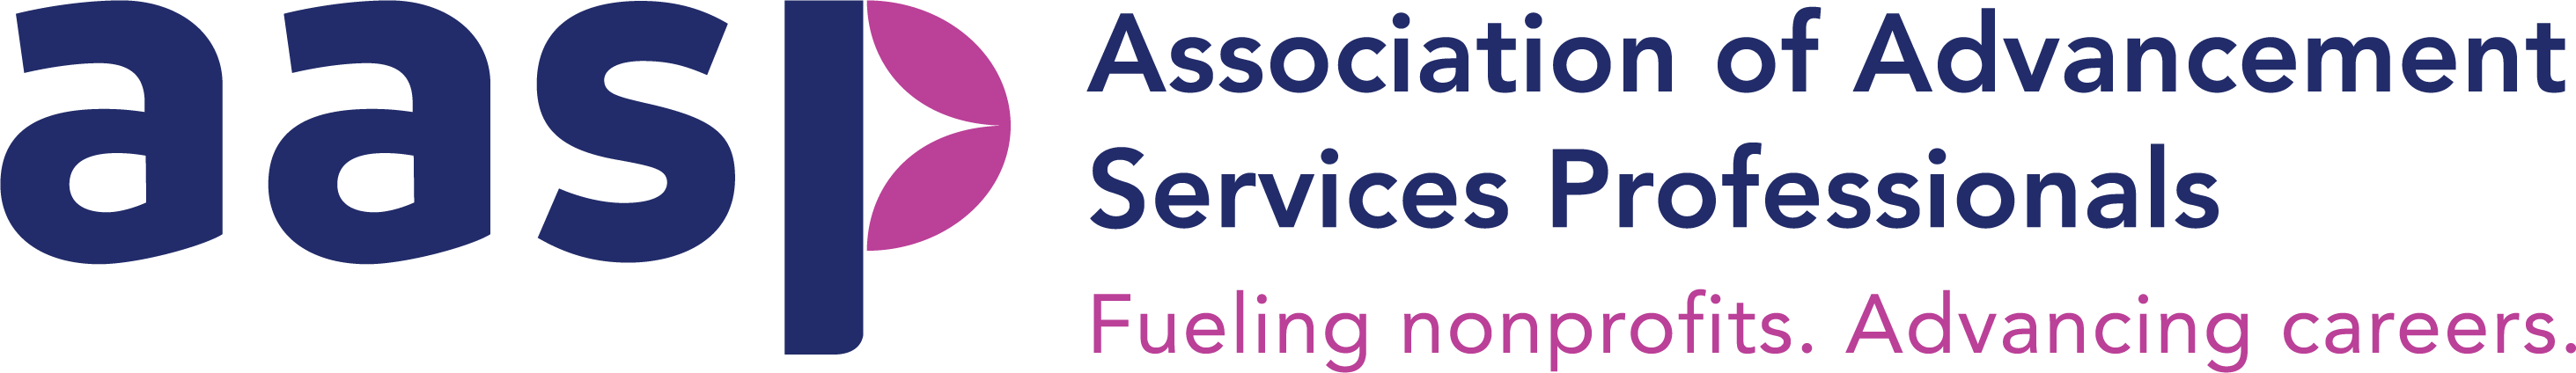 Association of Advancement Service Professionals